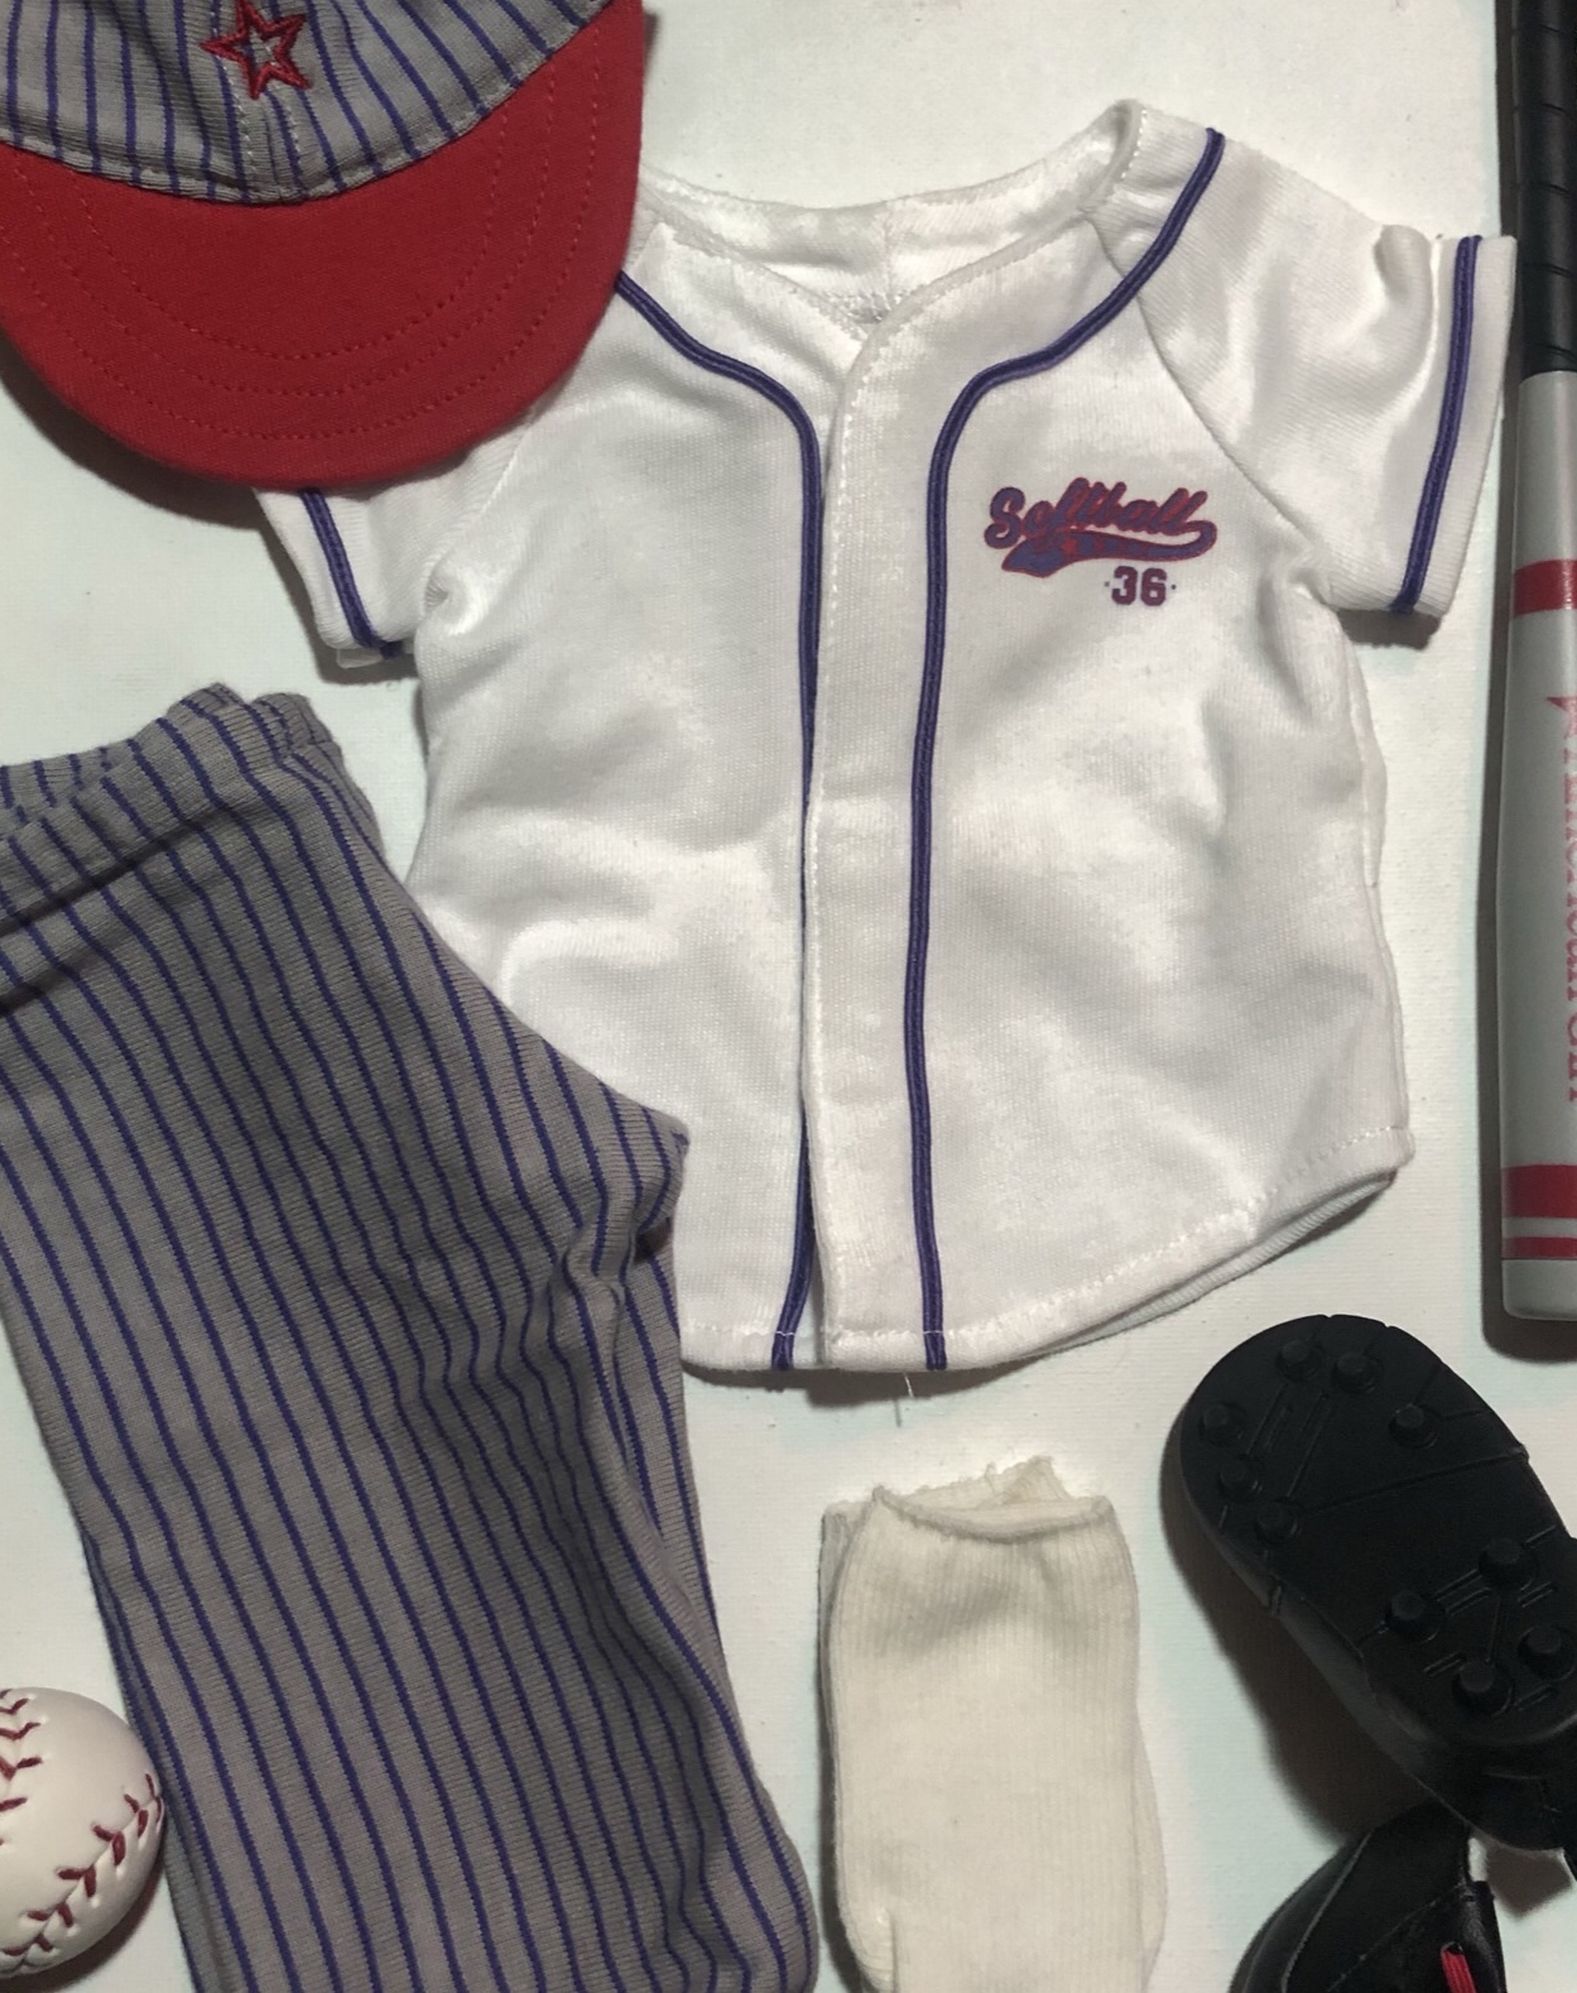 American Girl Doll Clothes (Baseball/Softball Outfit)